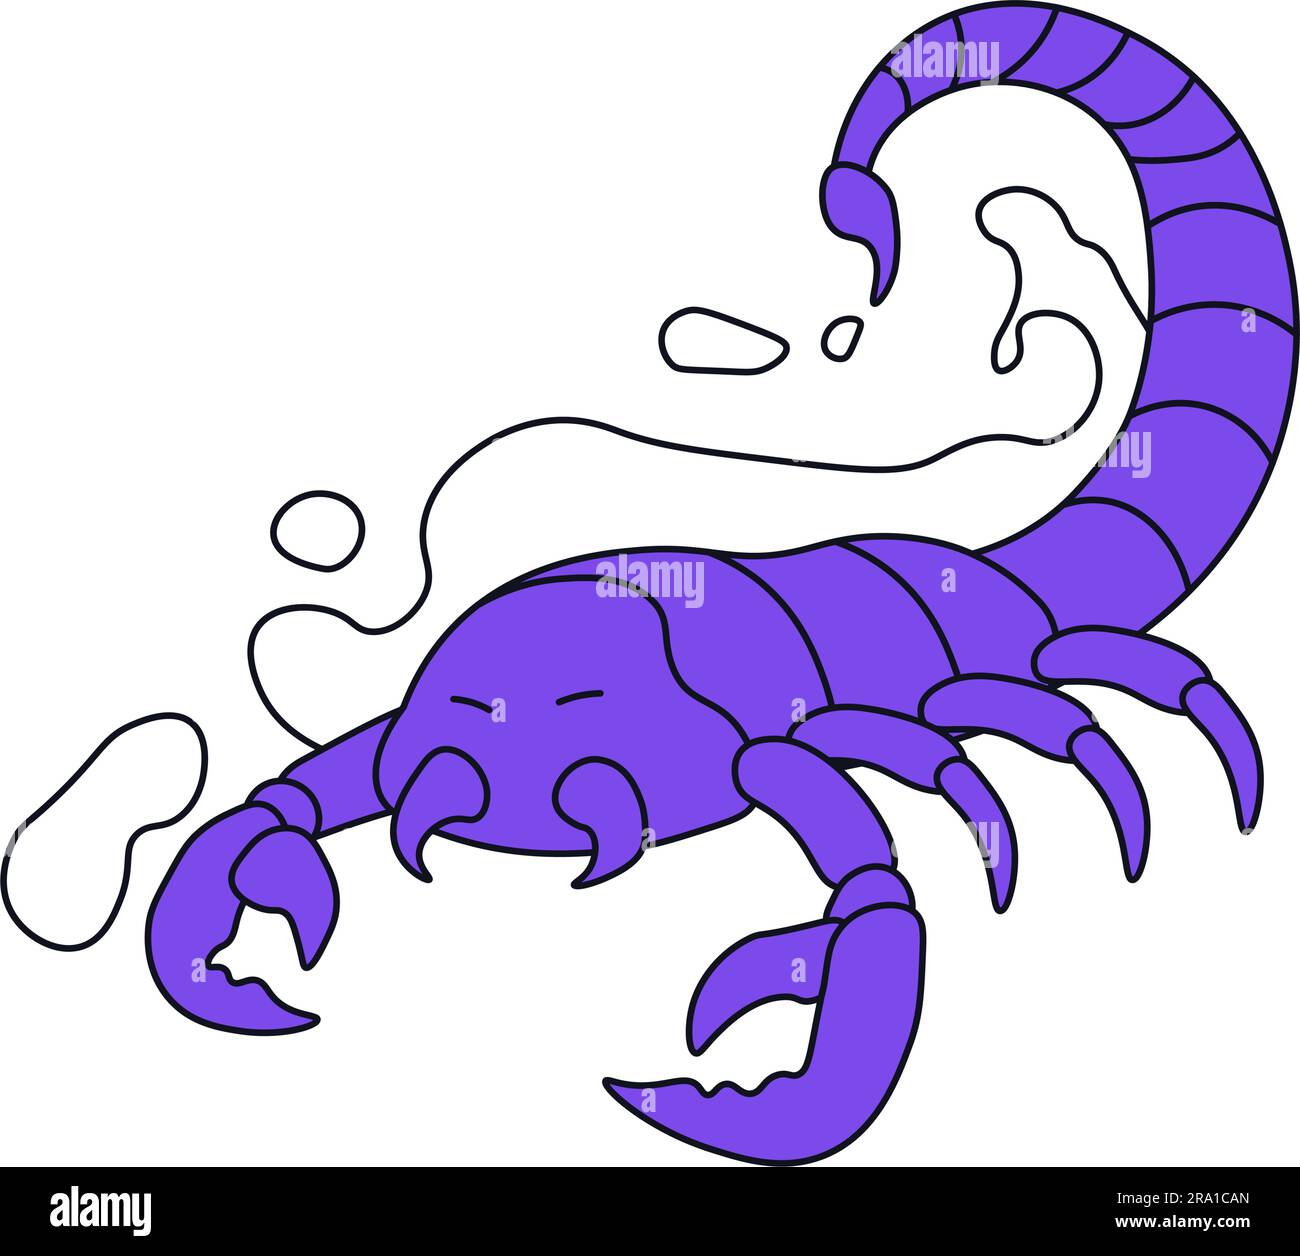 Zodiac sign of Scorpius Scorpion, astronomy symbol Stock Vector